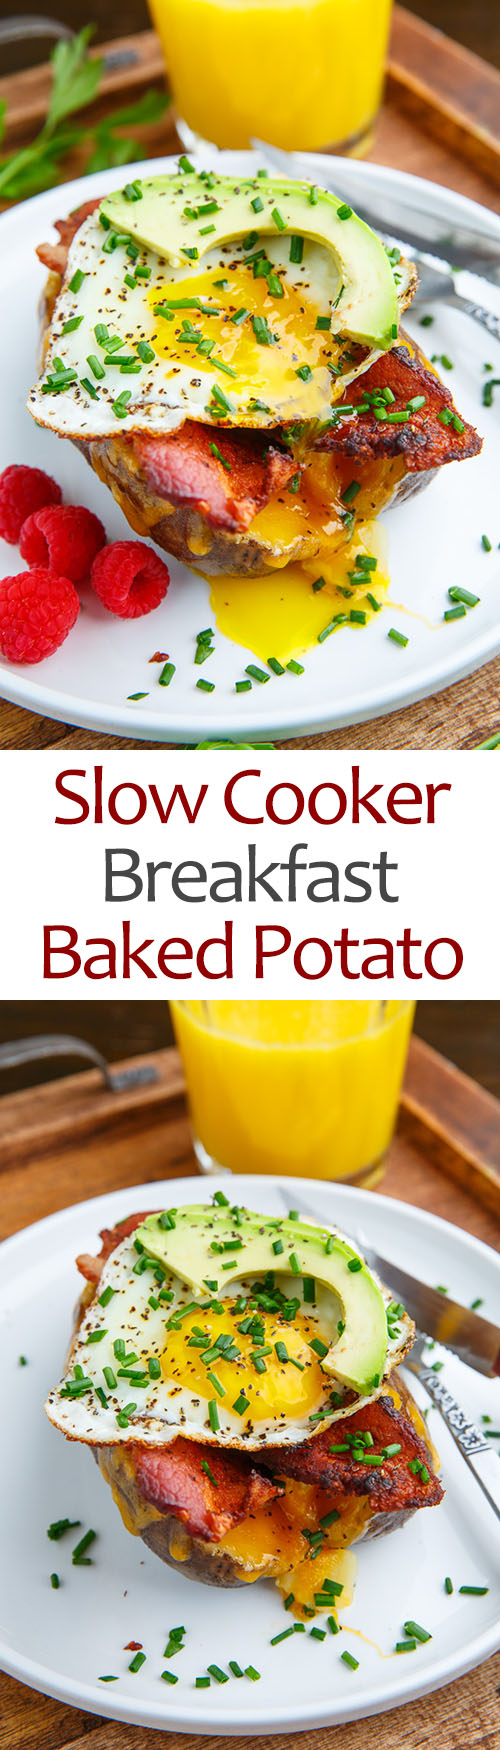 Slow Cooker Breakfast Baked Potatoes